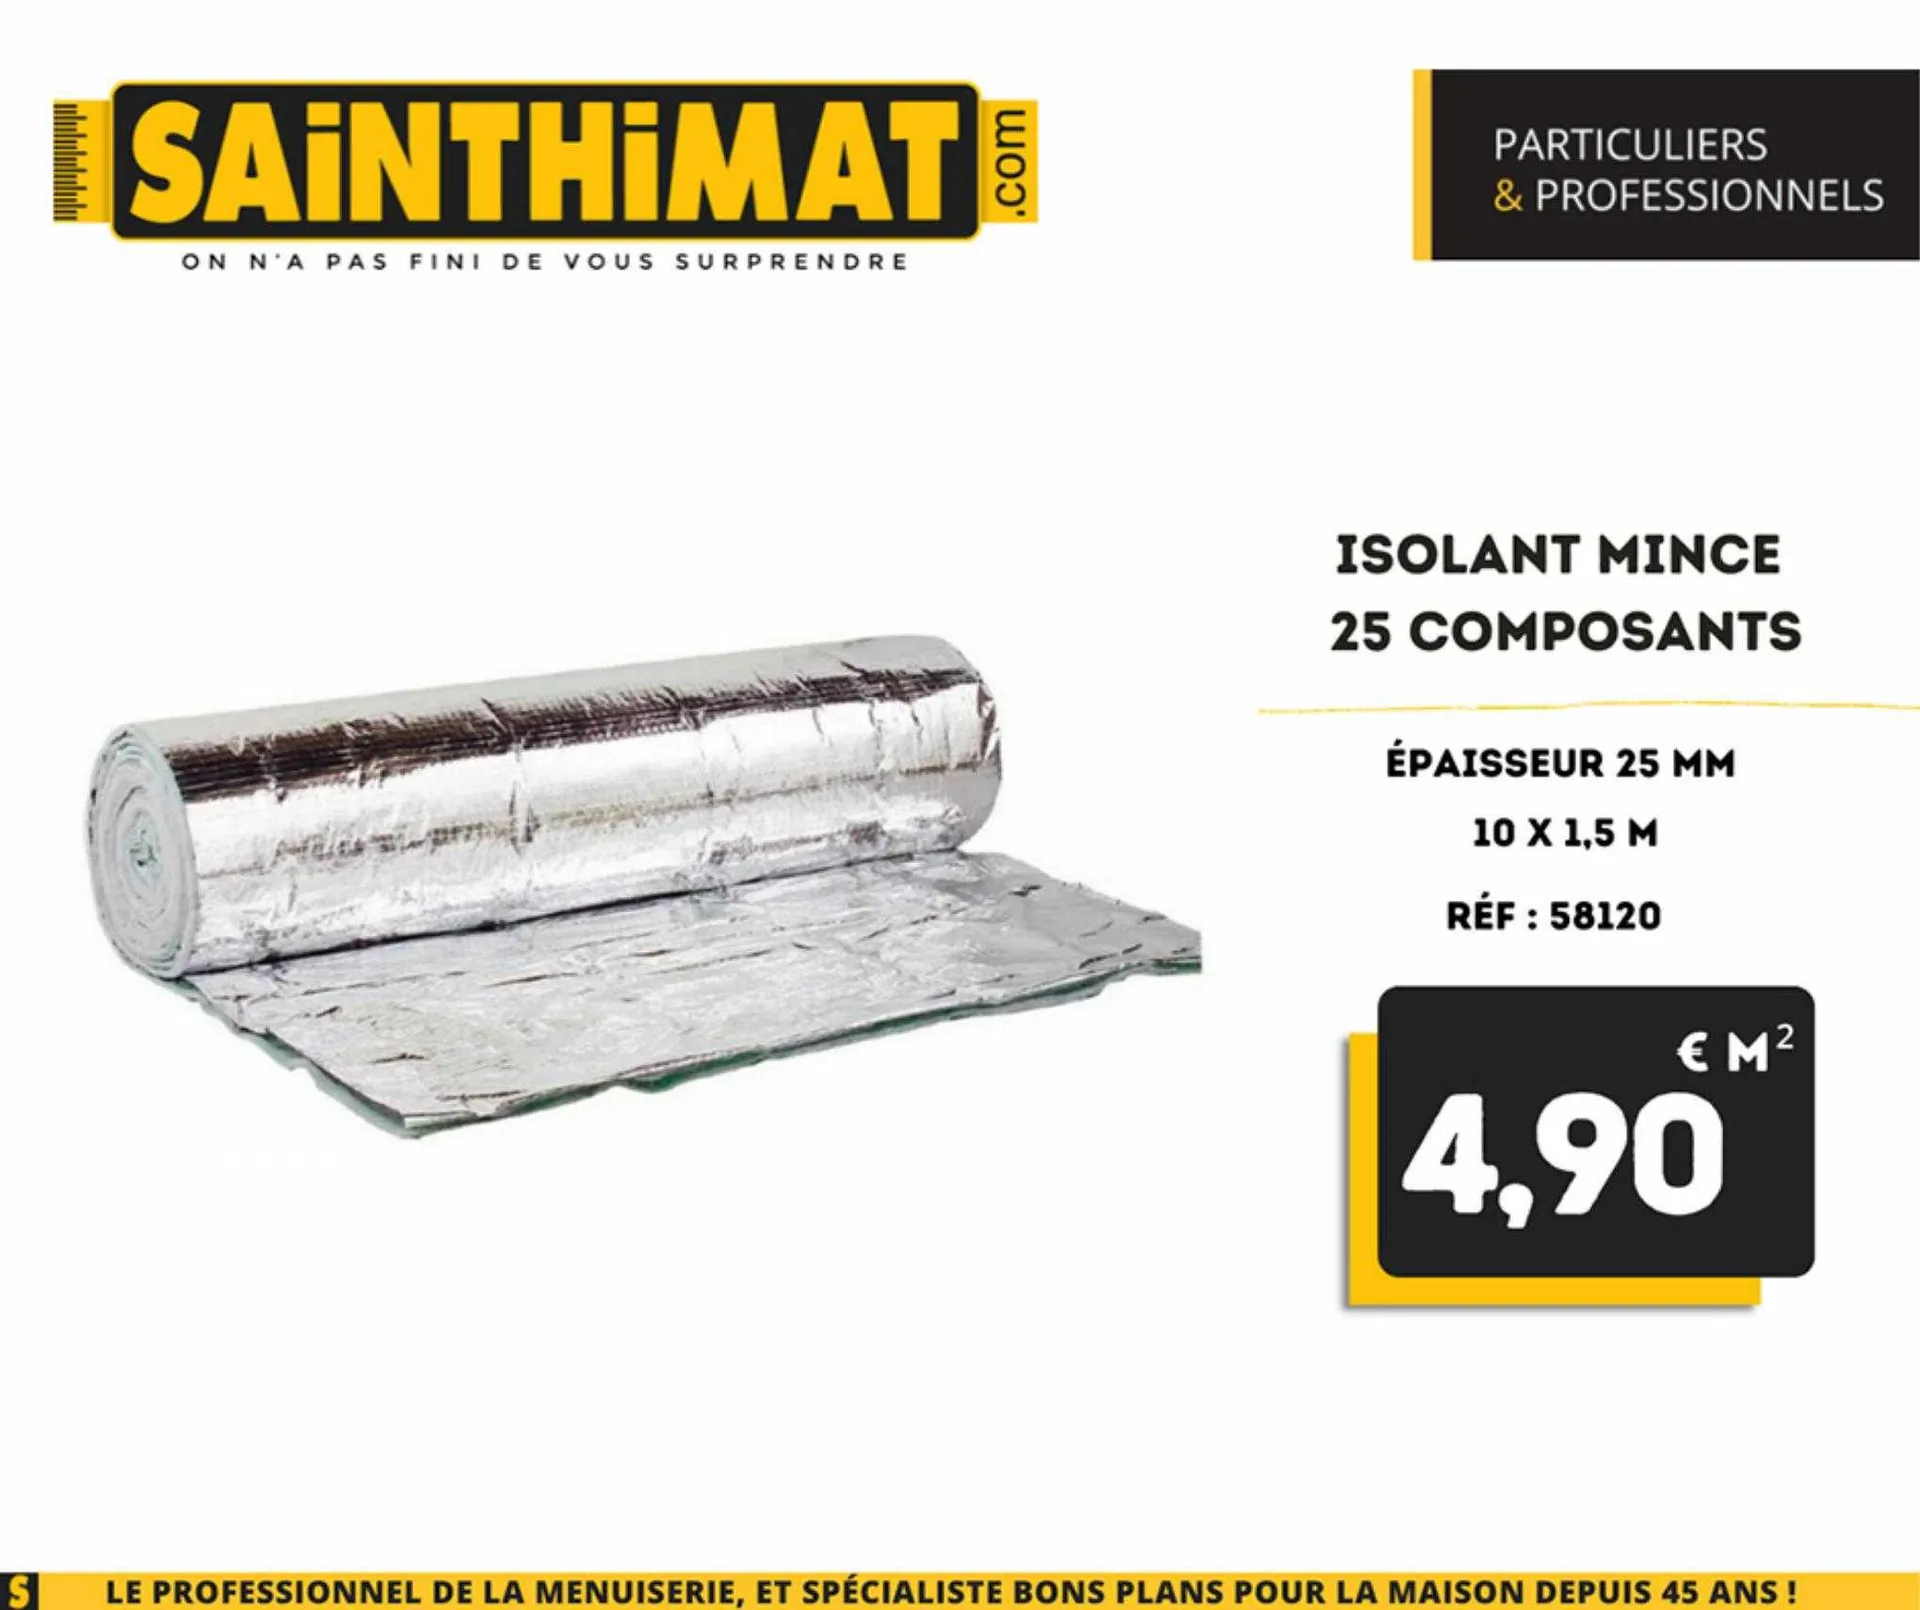 Catalogue Sainthimat - 3